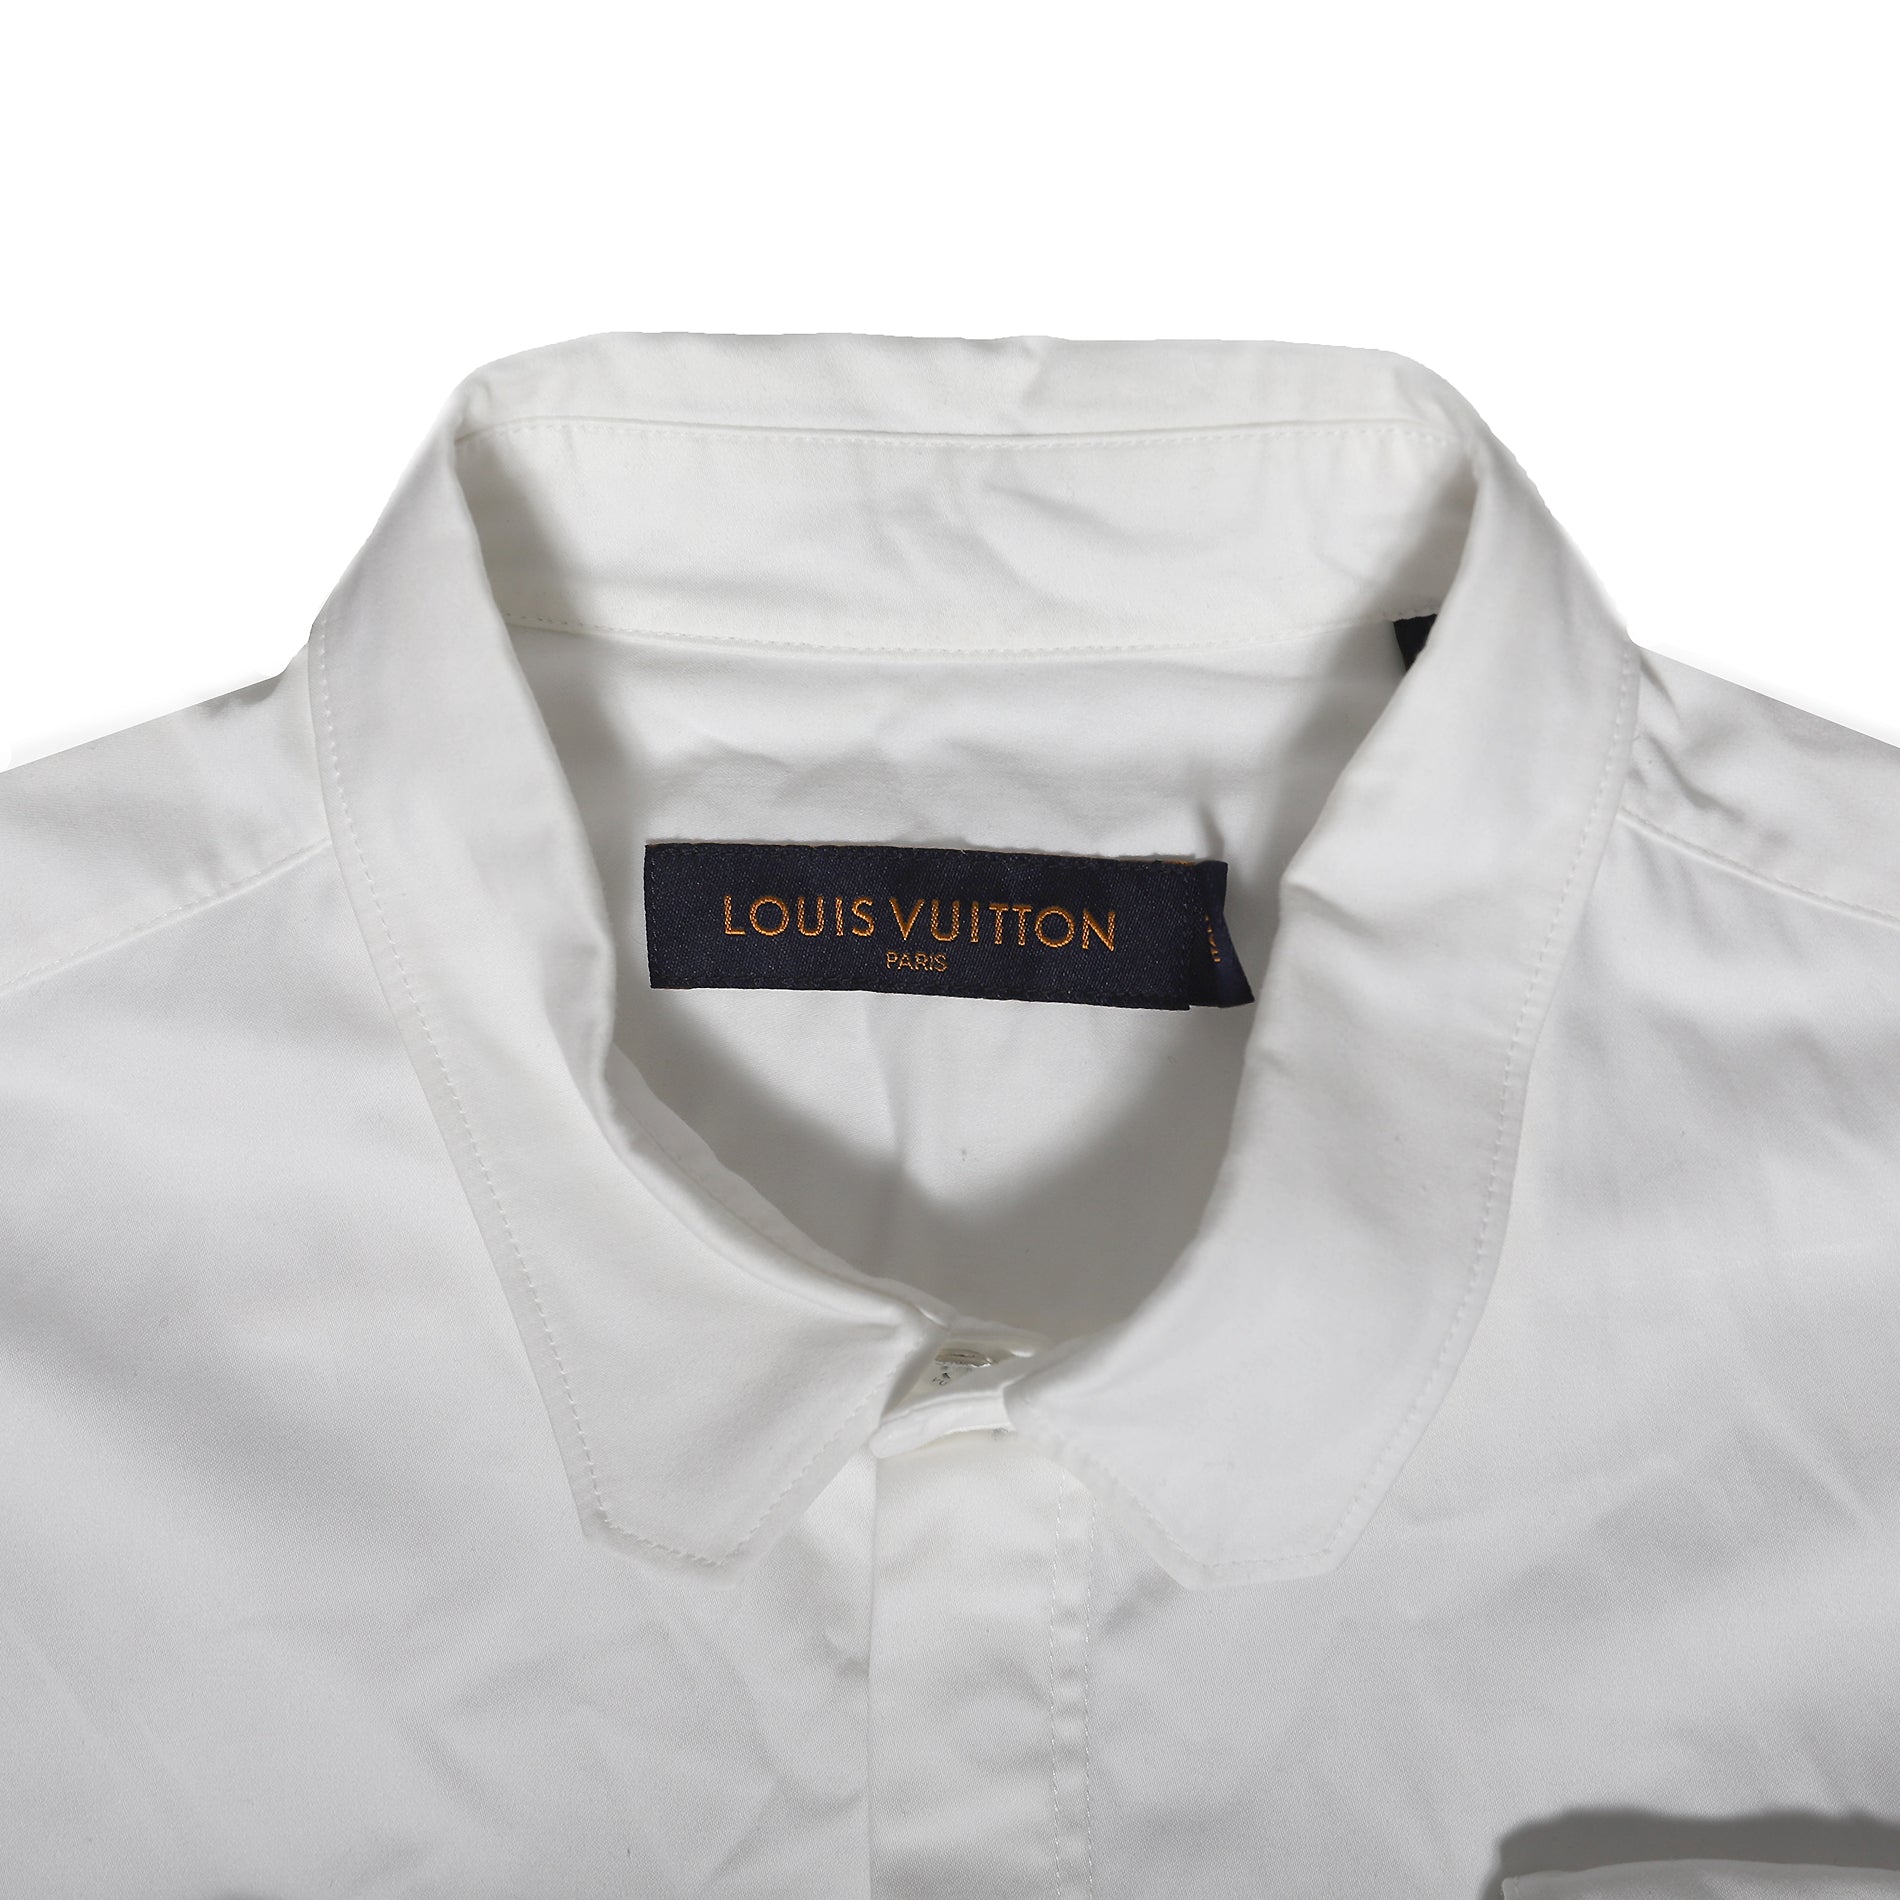 Louis Vuitton Long Sleeve Button-Up Top